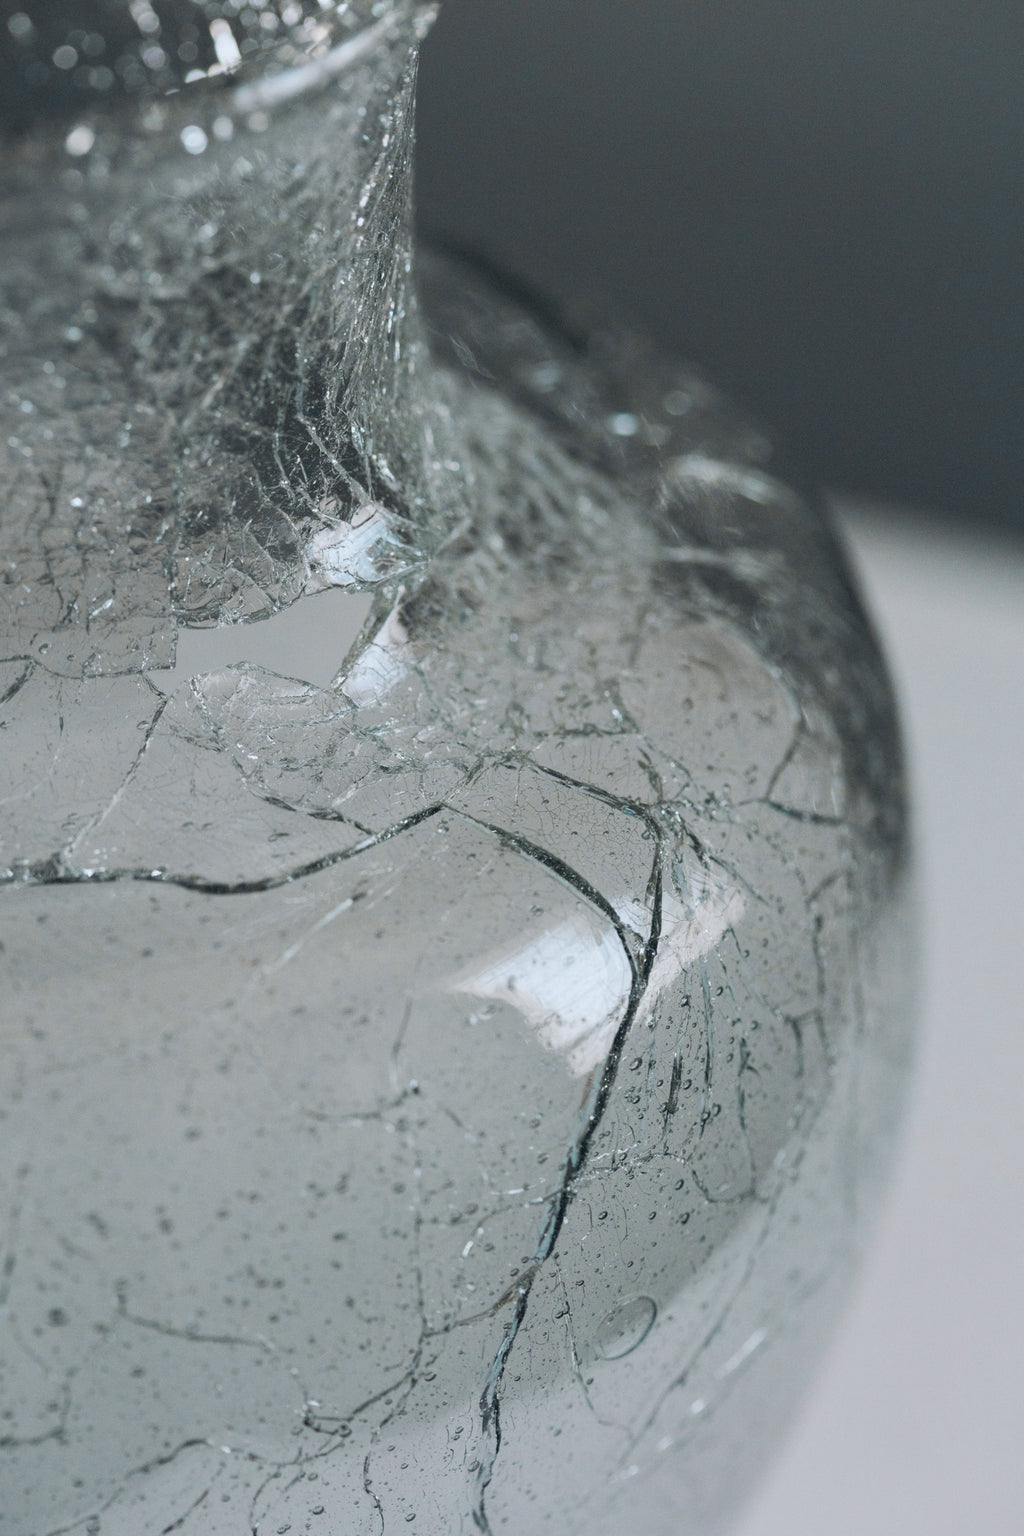 Glass Vase Sculpture - KS03